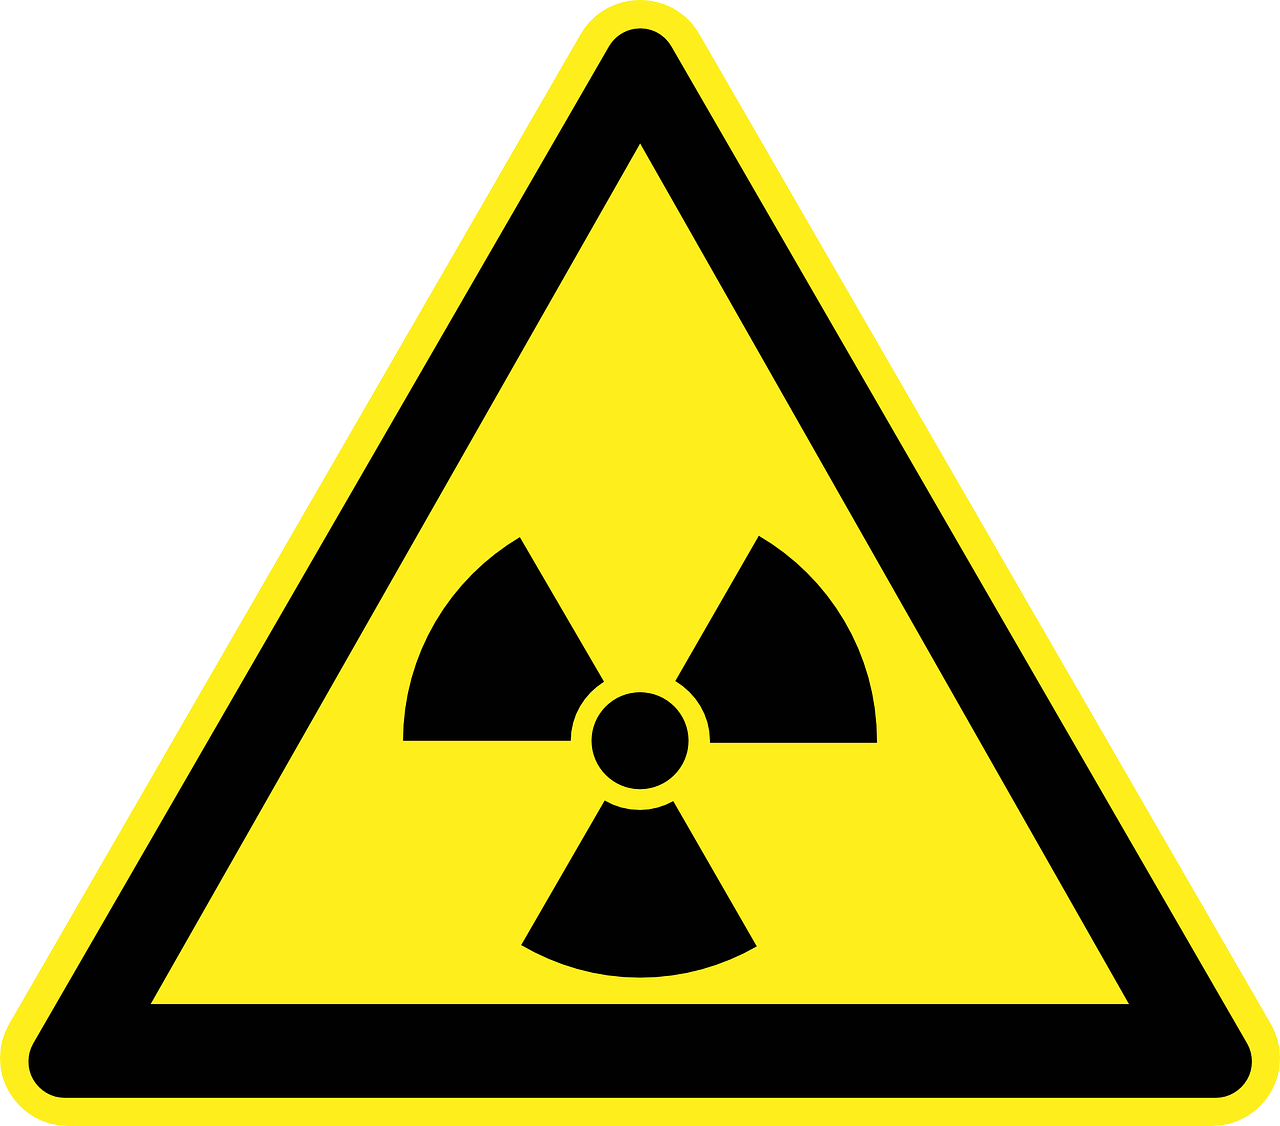 Måling: Forhøjet radioaktivitet i Europa